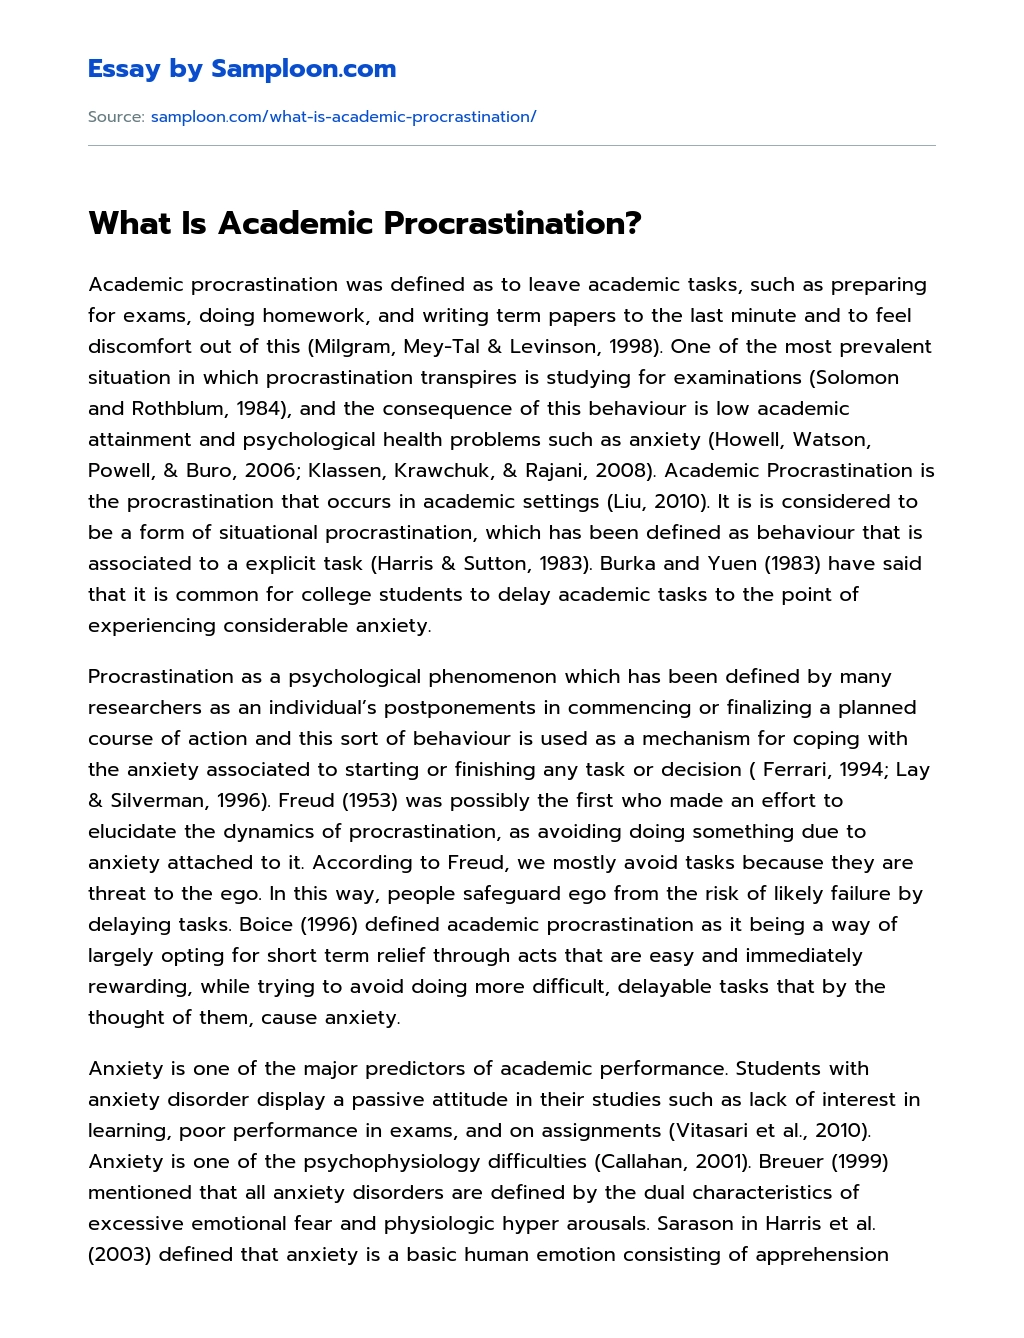 What Is Academic Procrastination? essay